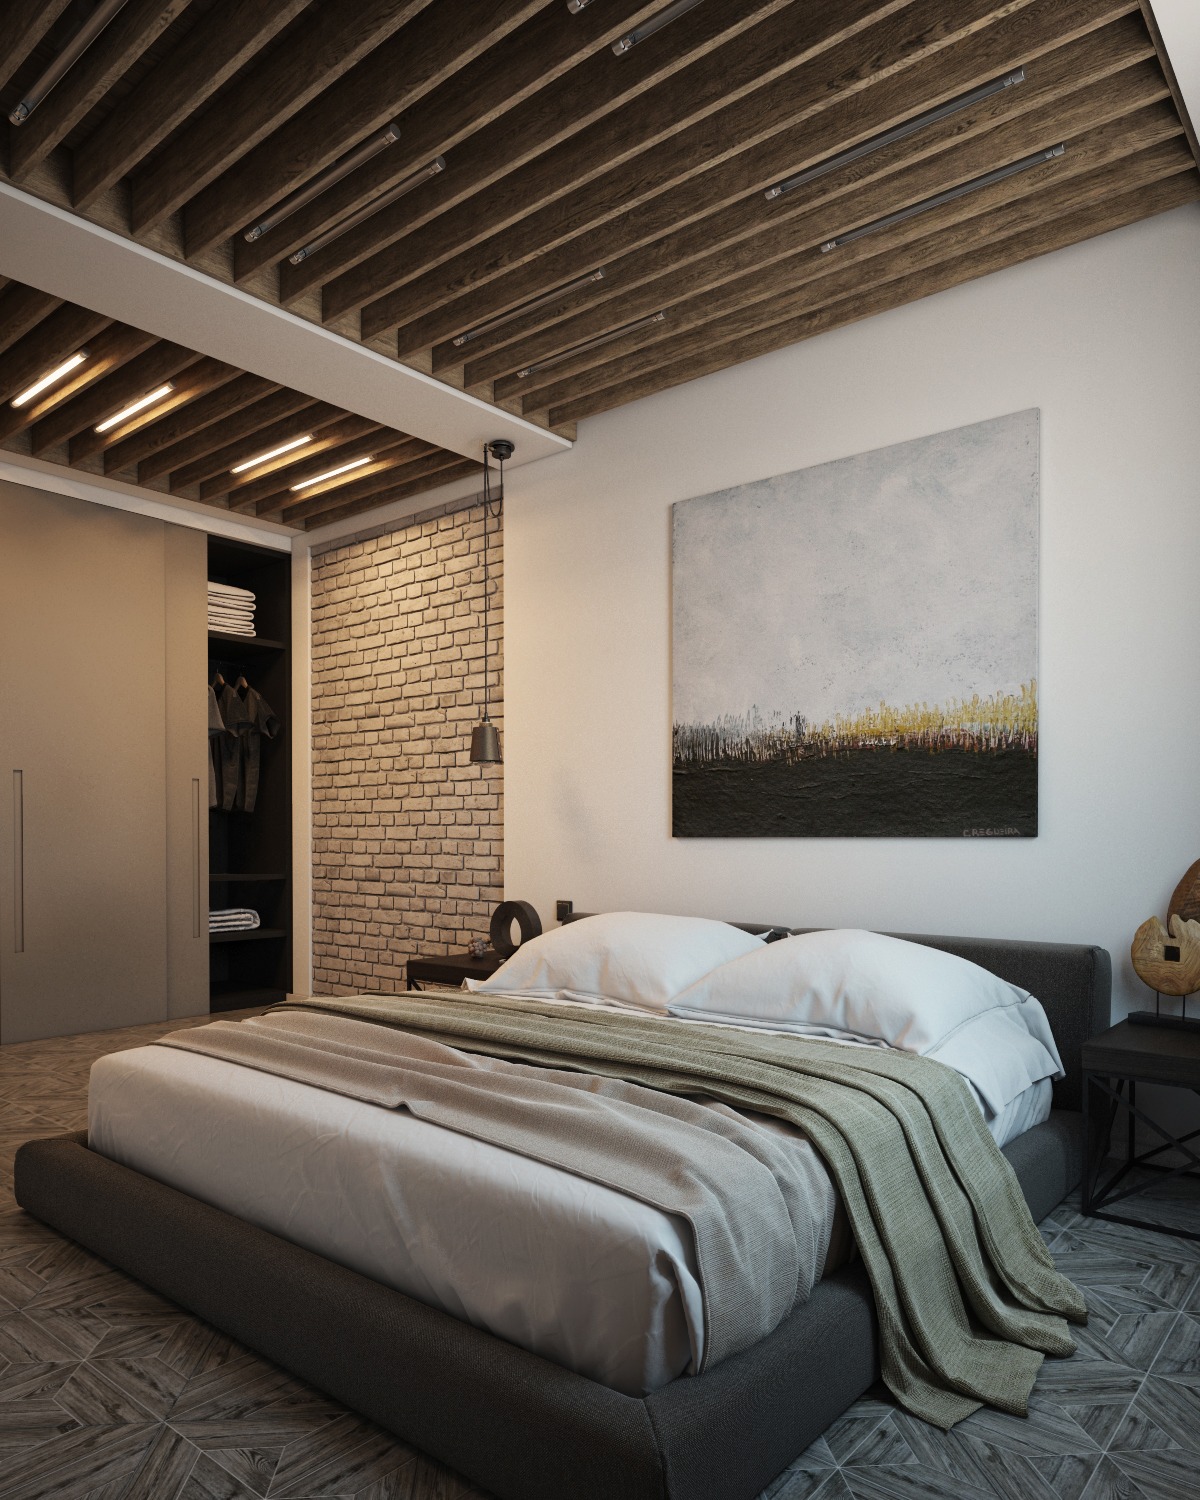 Exposed Brick Bedroom Wall Interior Design Ideas.